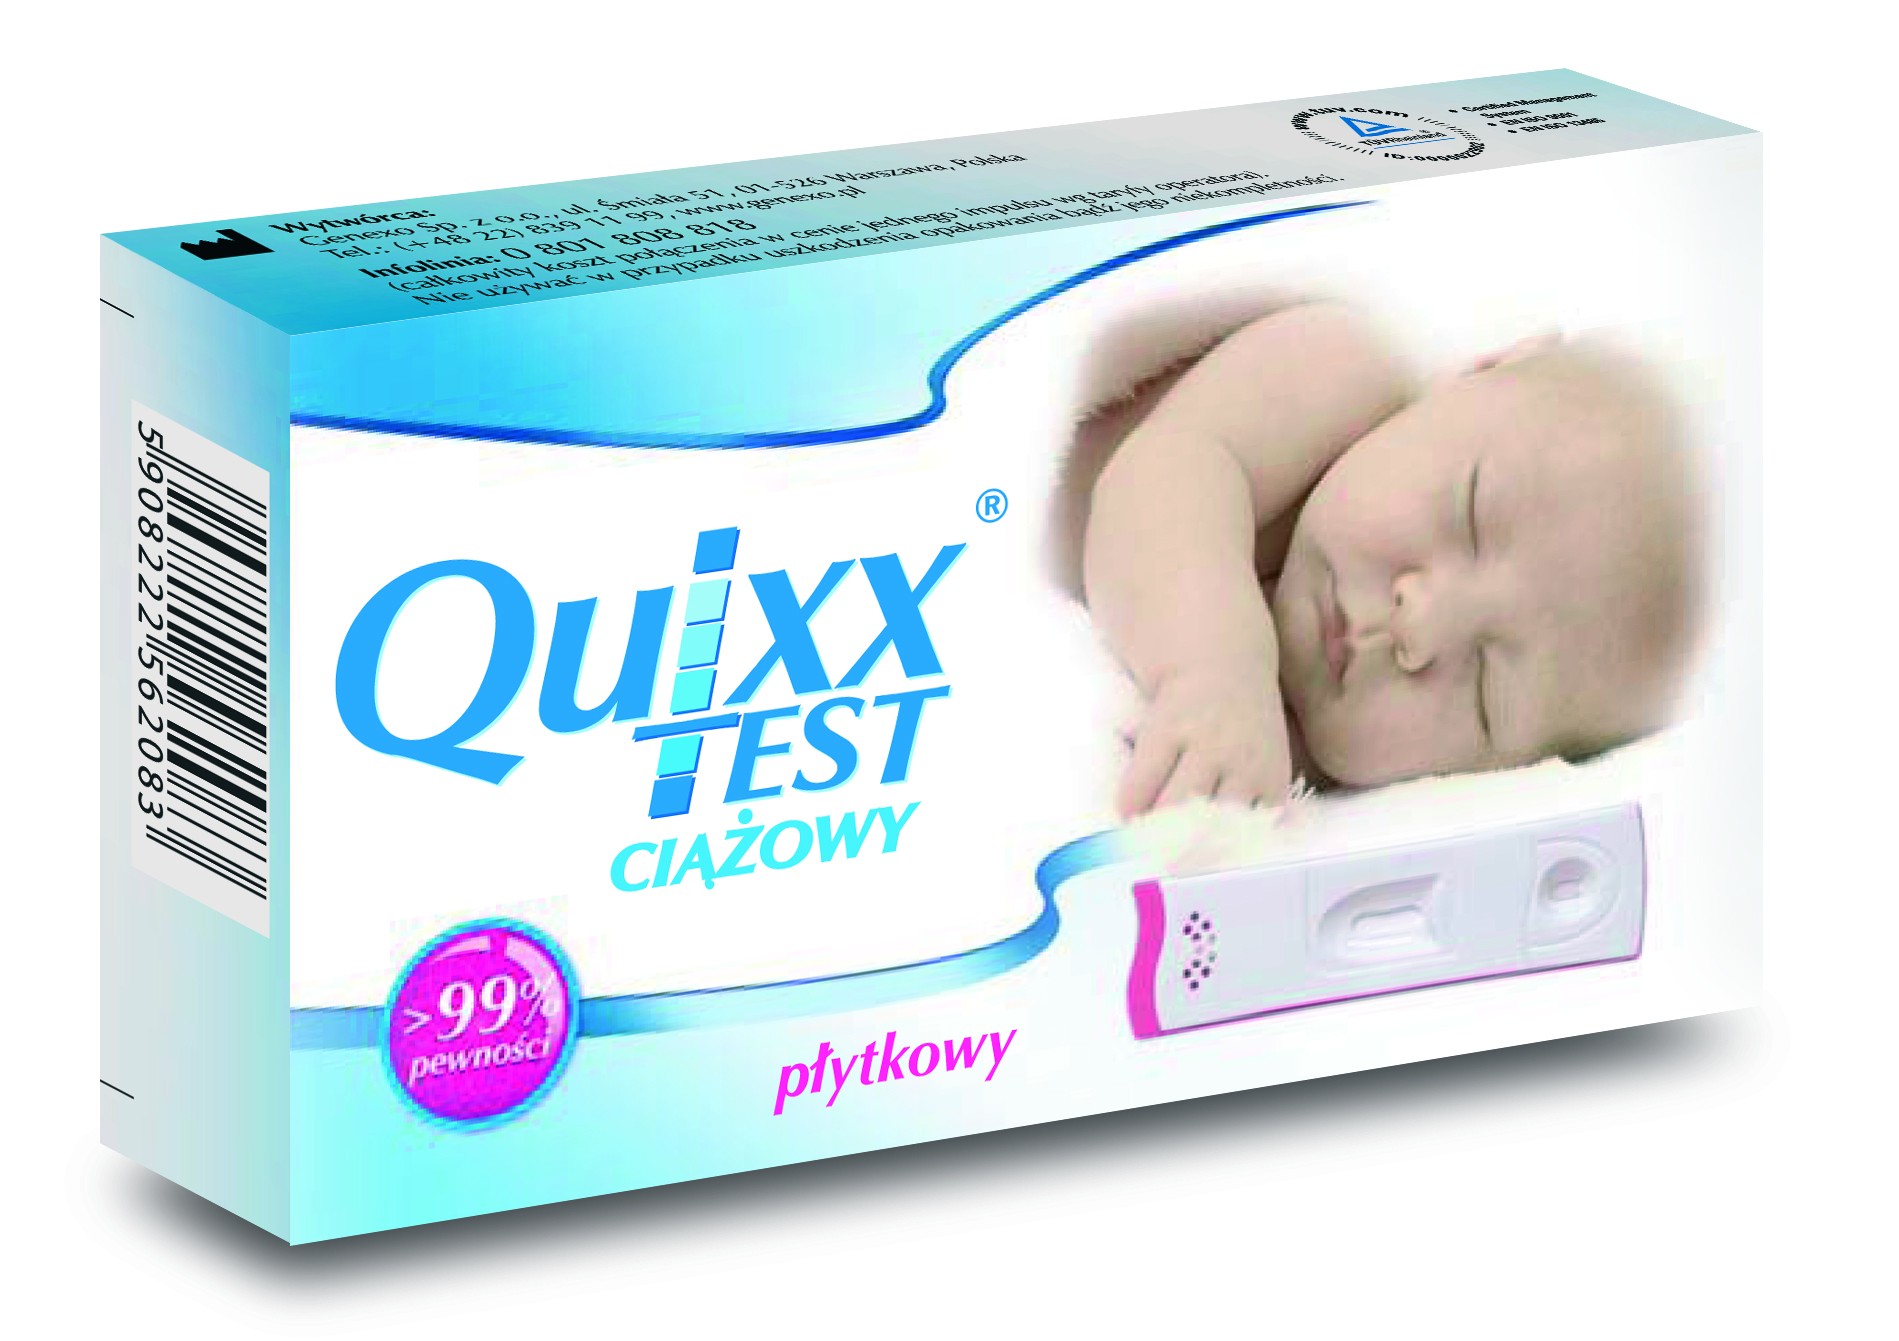 Quixx pregnancy test platelet